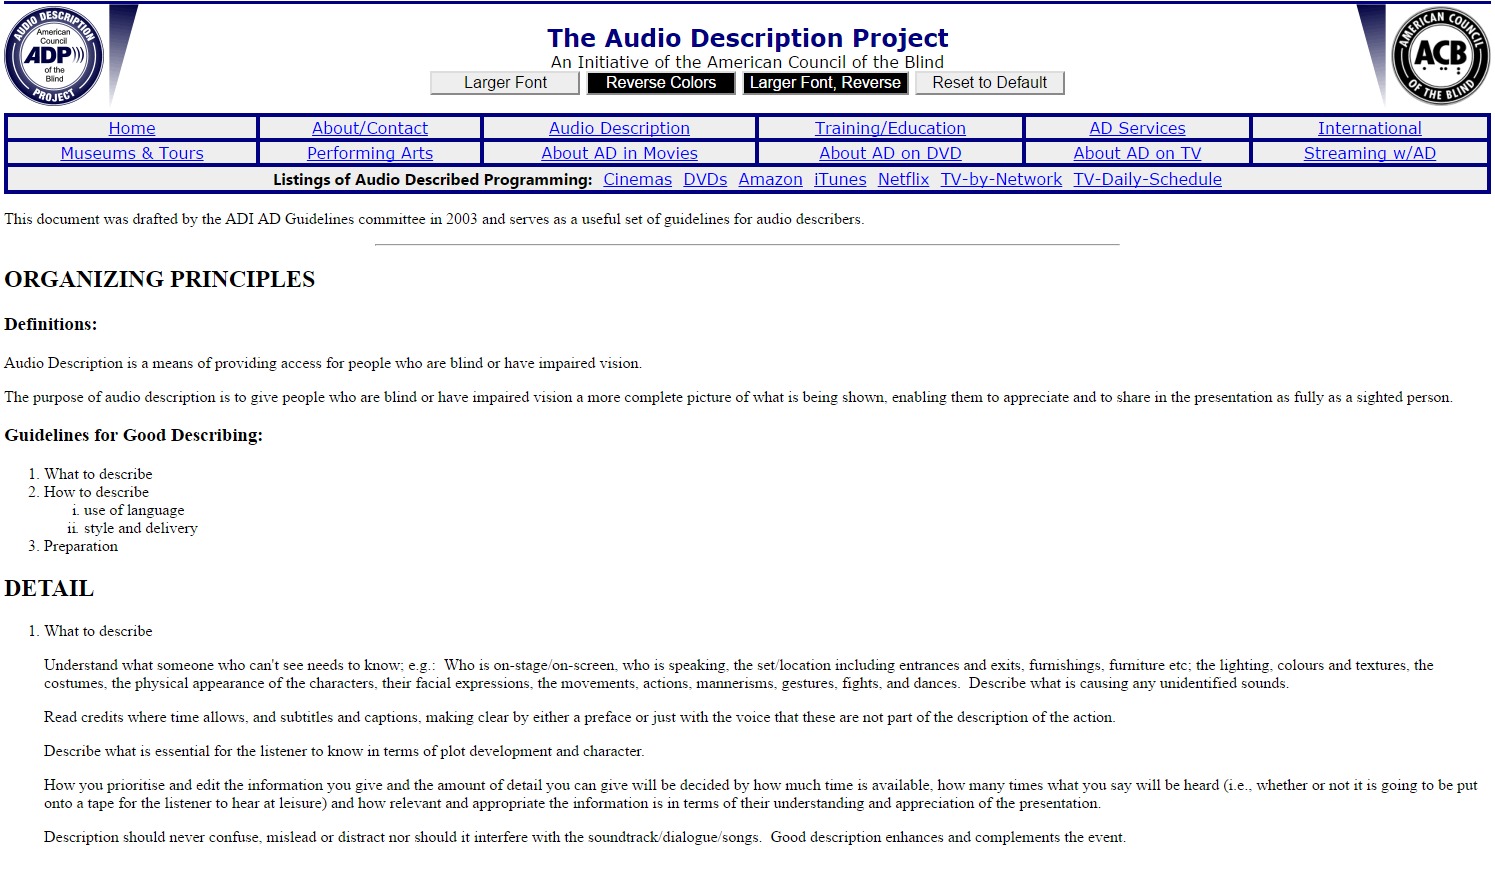 The ACB Audio Description Project Guidelines